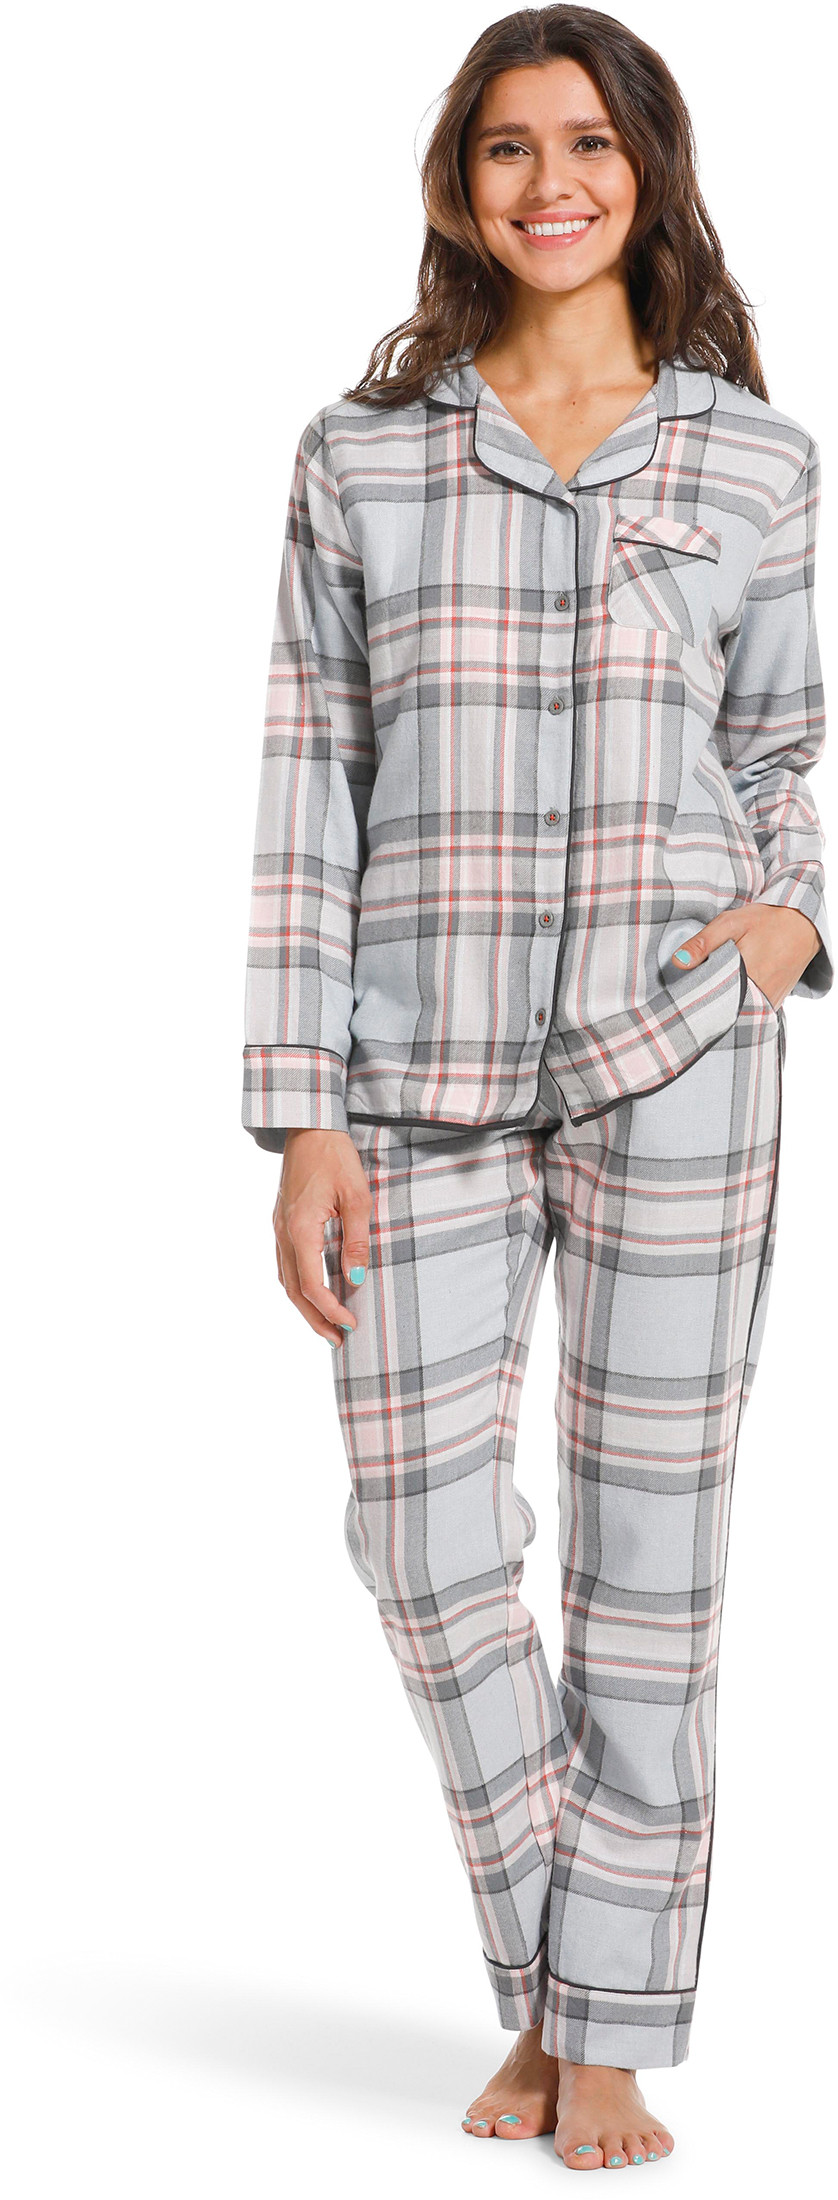 Rebelle dames pyjama flanel 21222-458-6-40